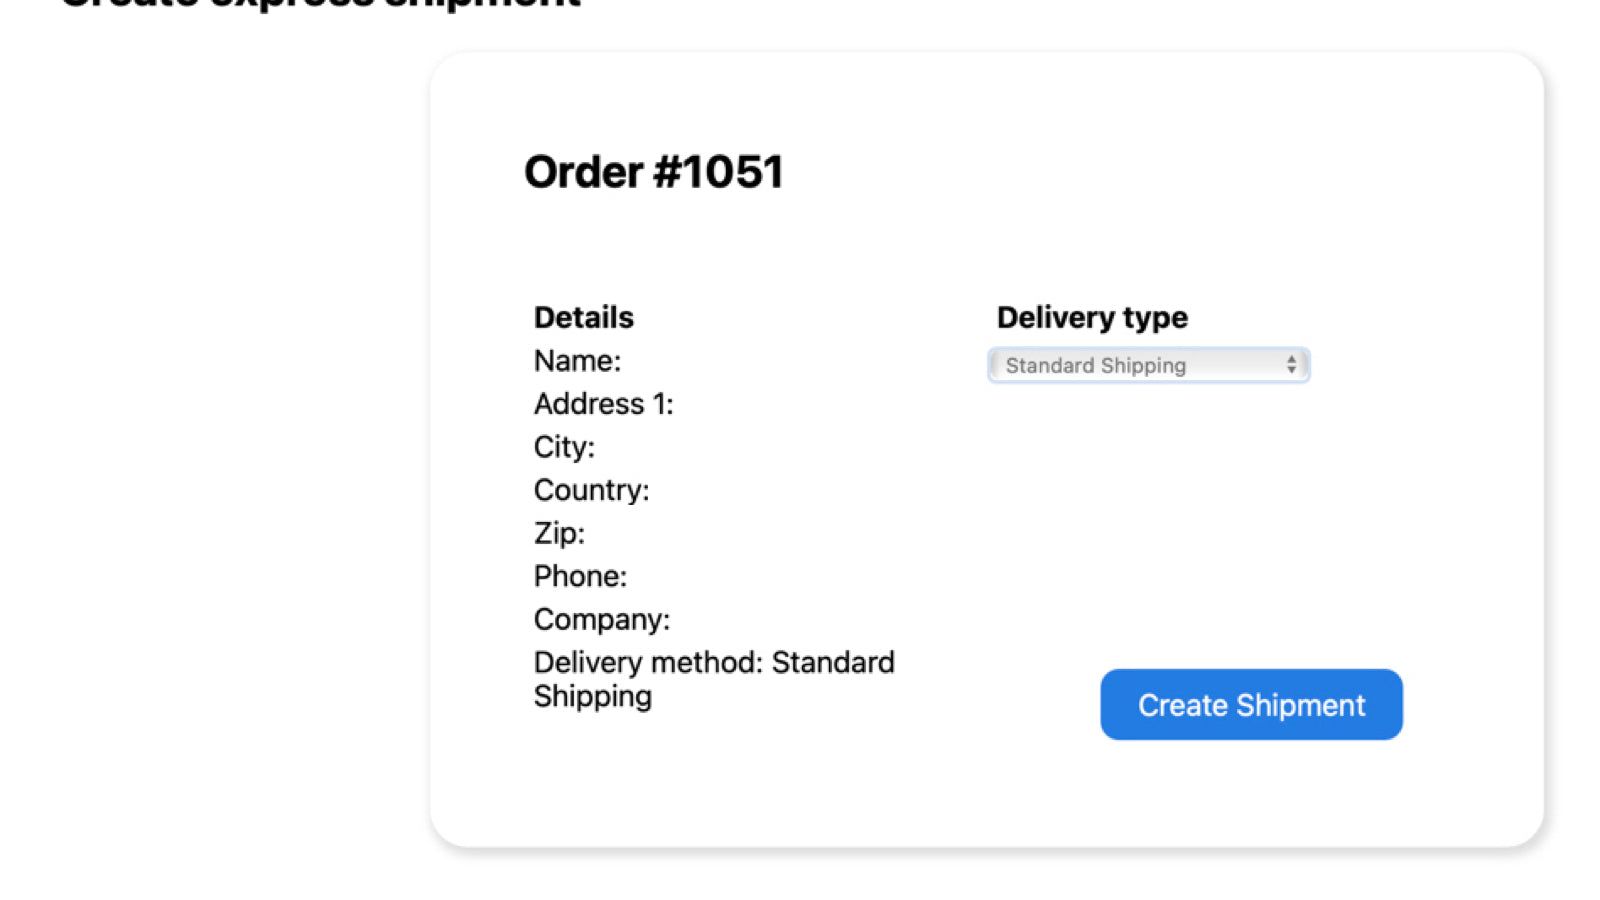 Order summary before creating shipment